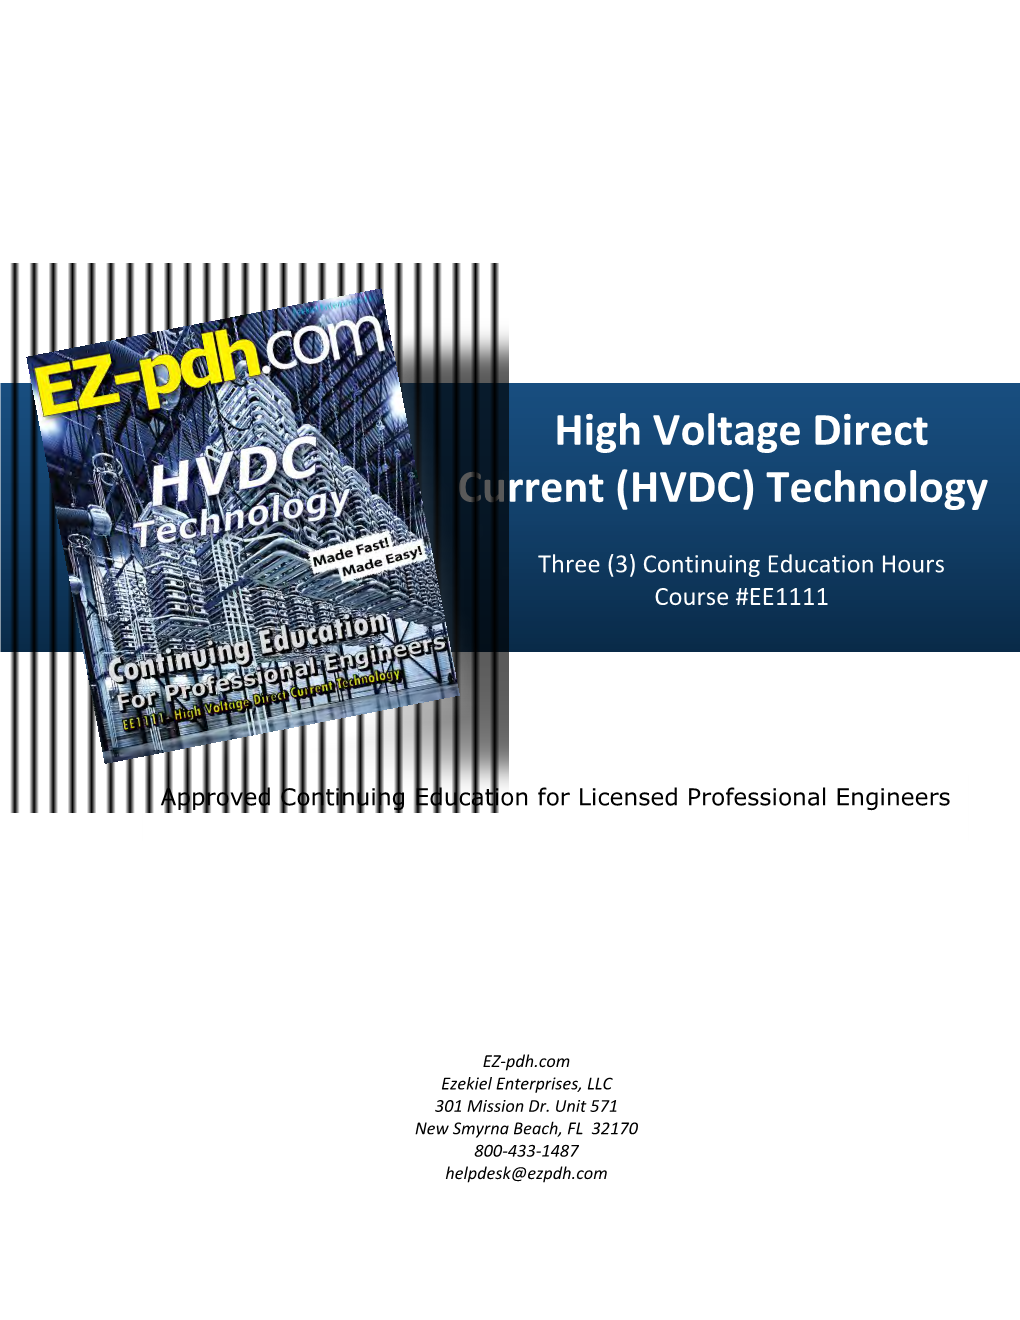 High Voltage Direct Current (HVDC) Technology